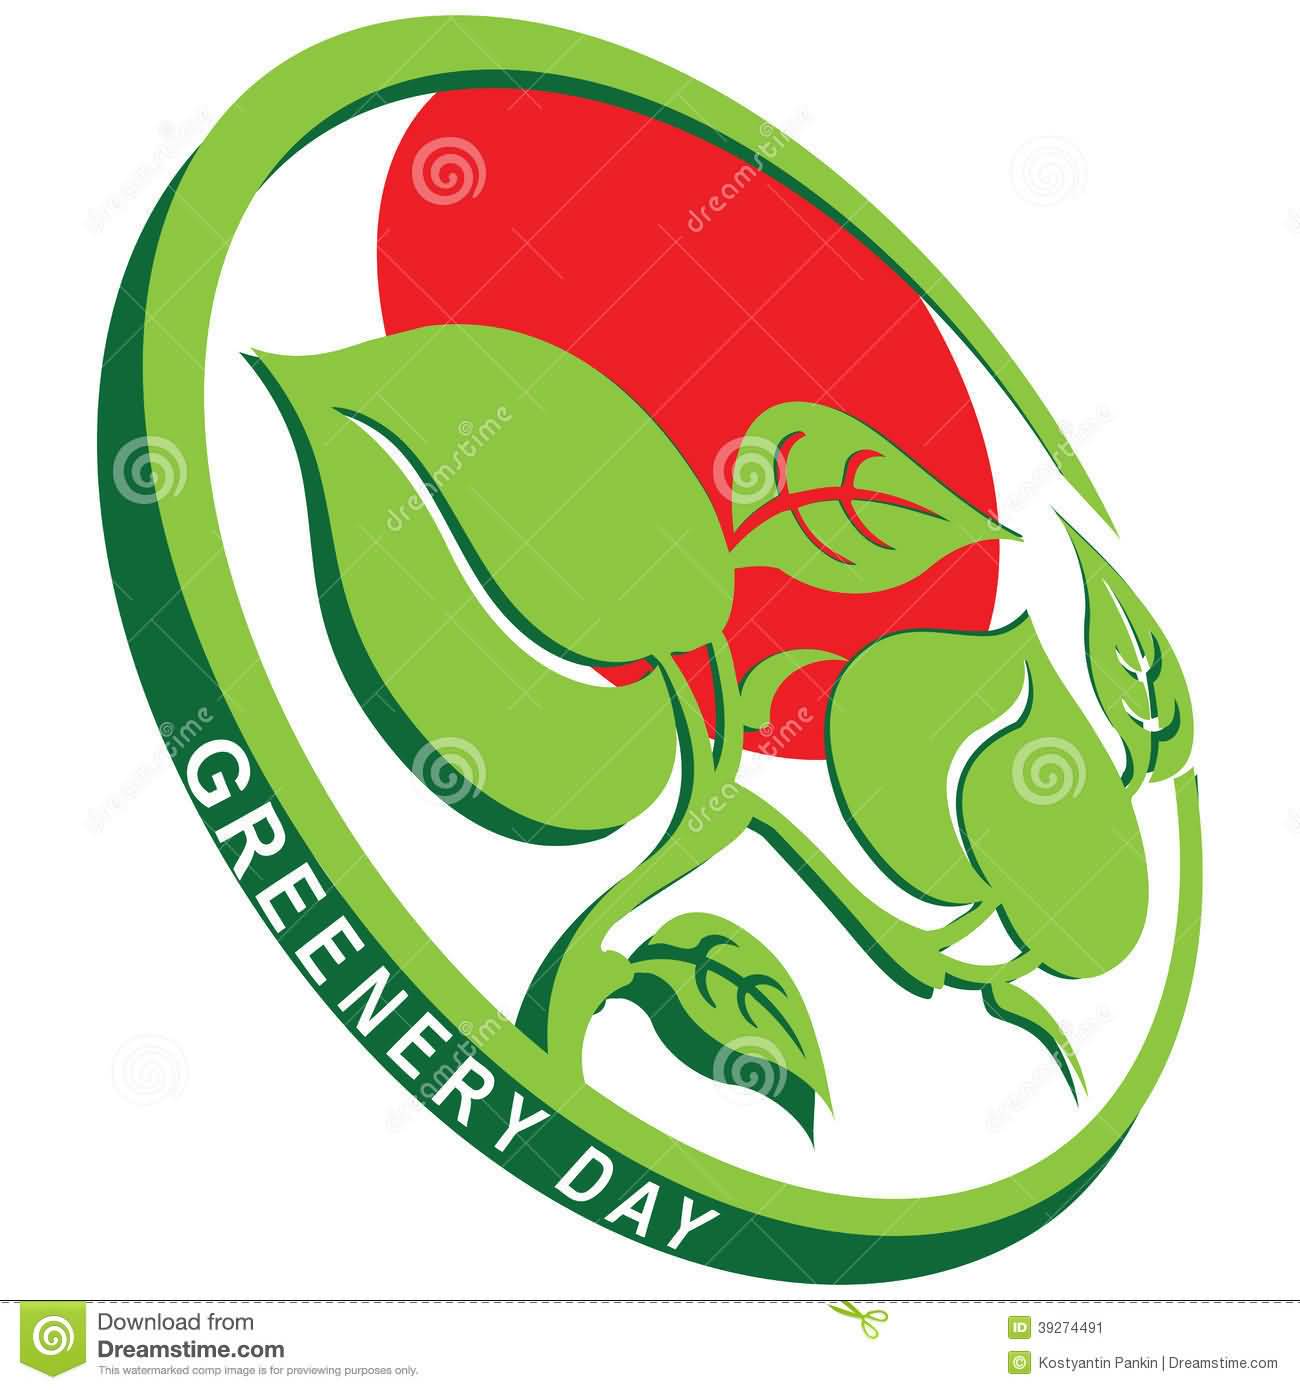 Greenery Day Emblem